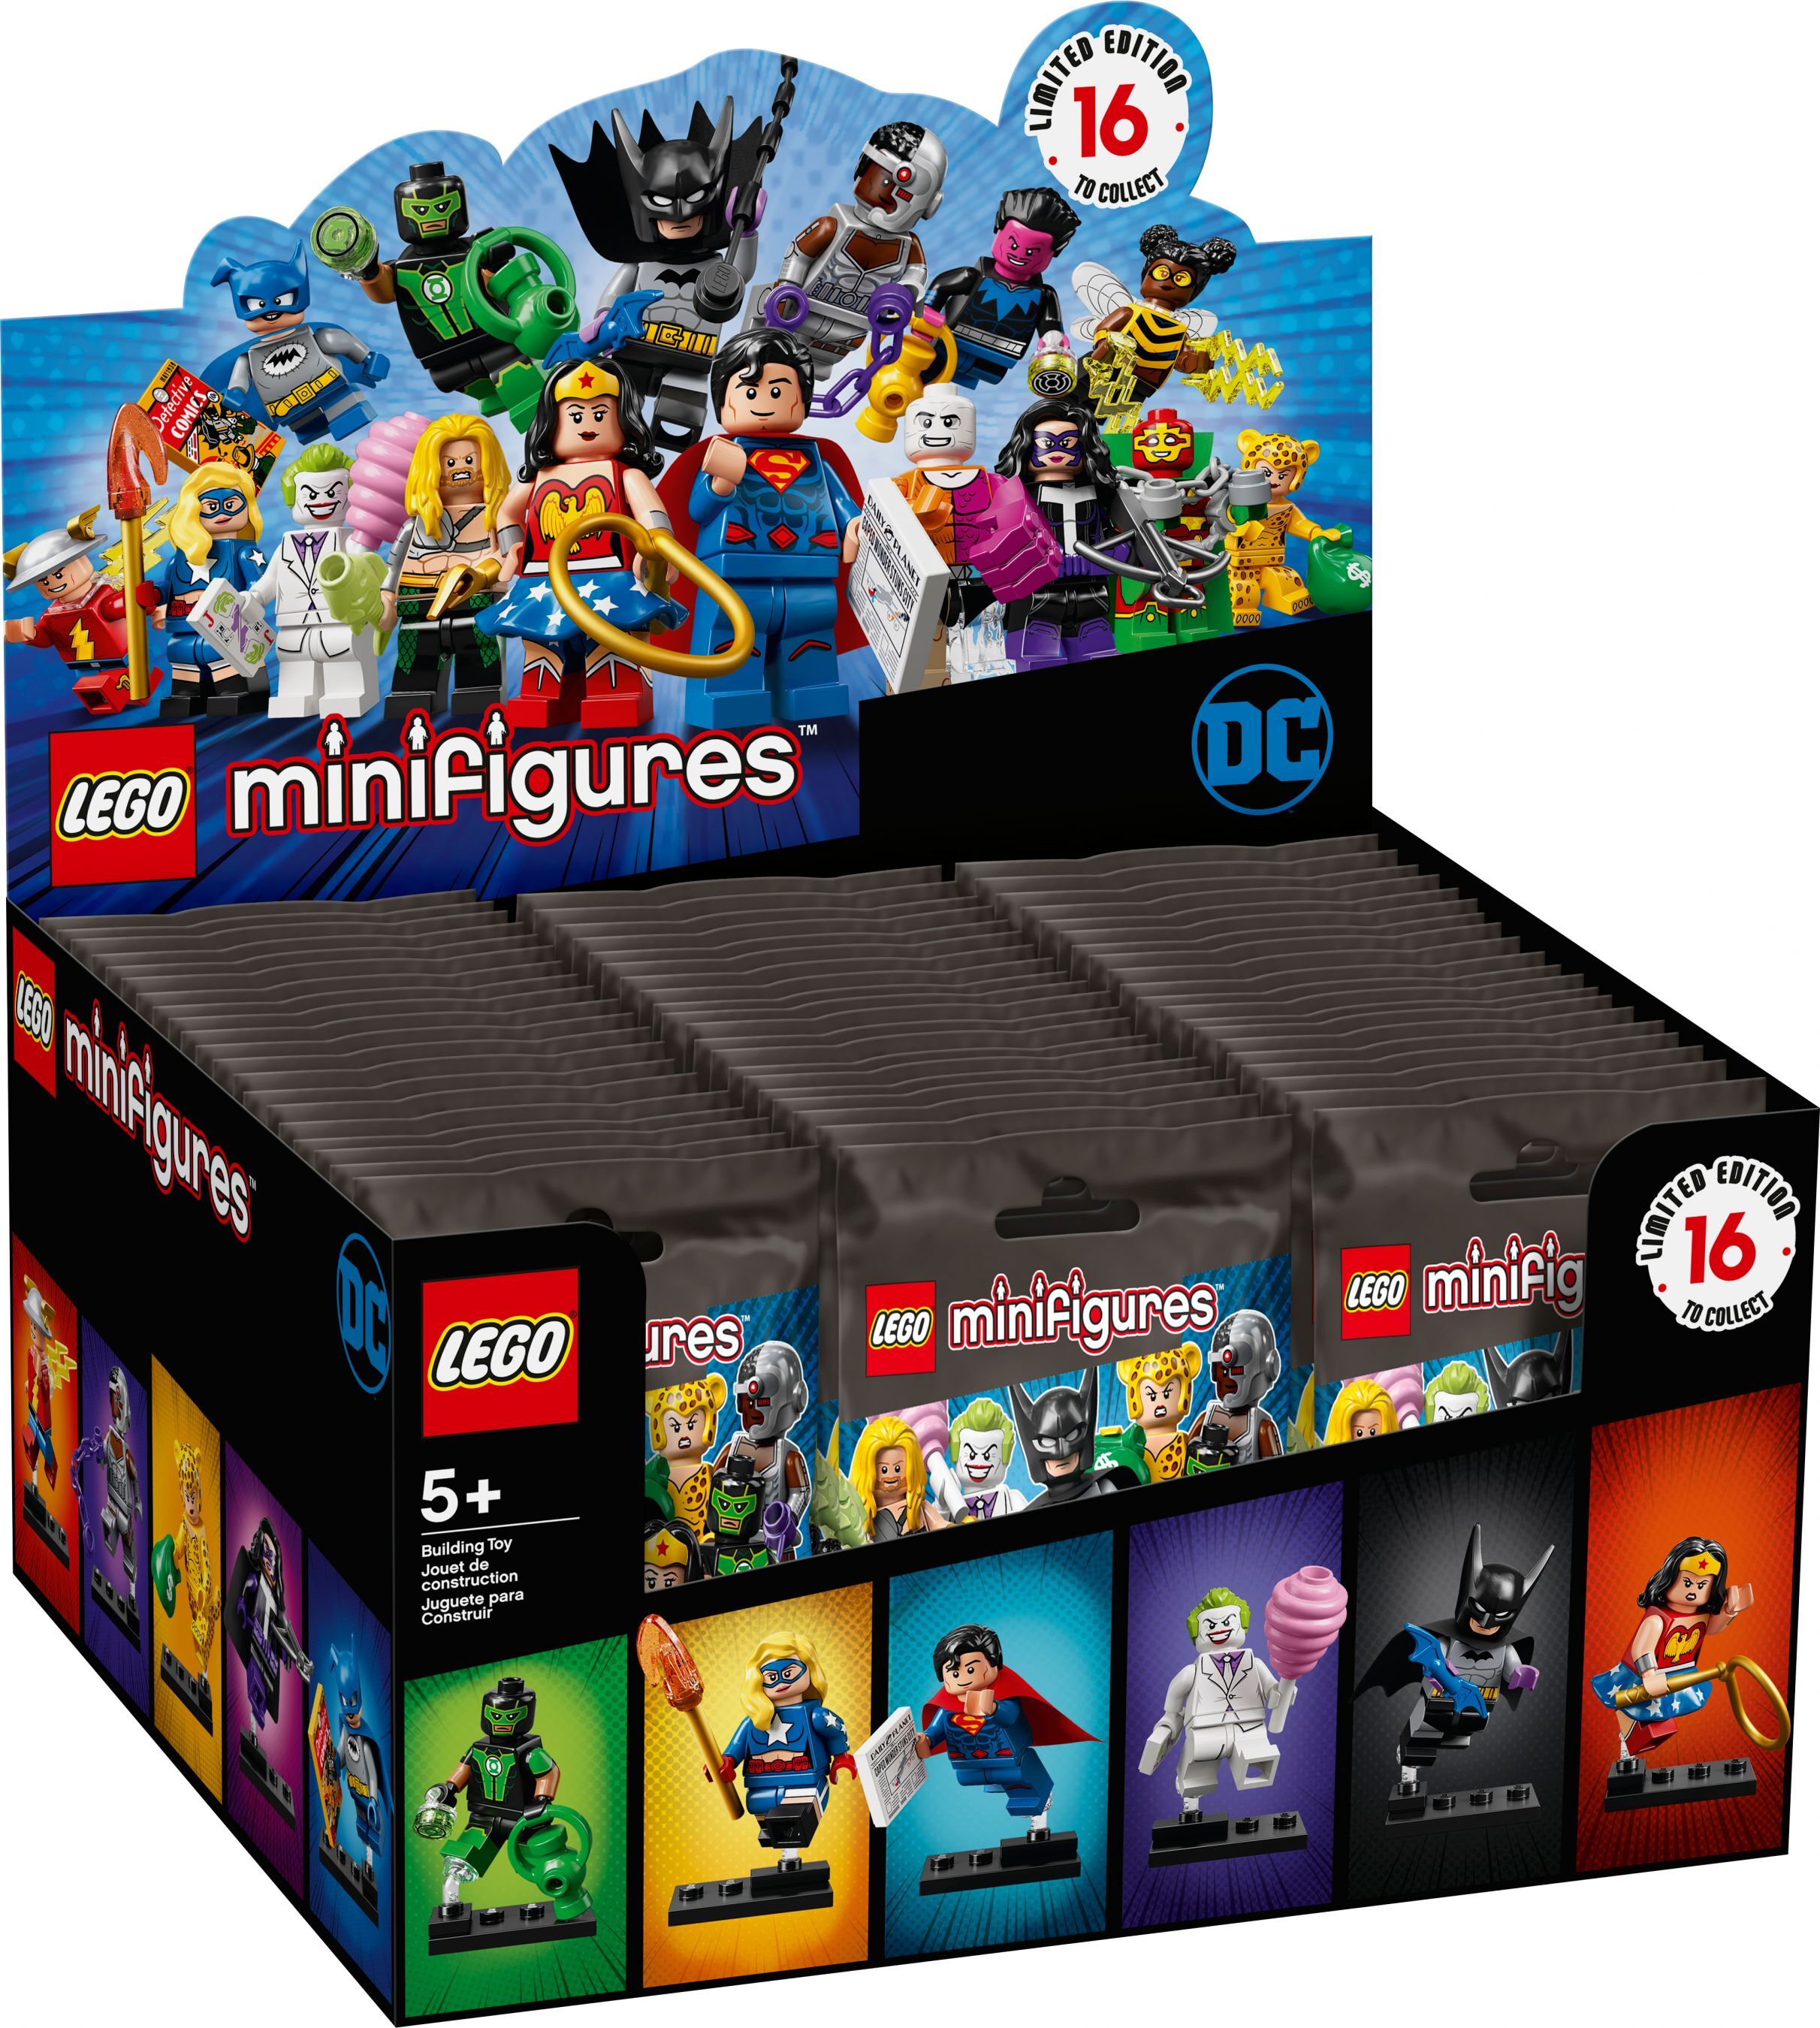 Random Set of 6 71026 DC Super Heroes Series New Sealed Blind Bags LEGO Minifigures 